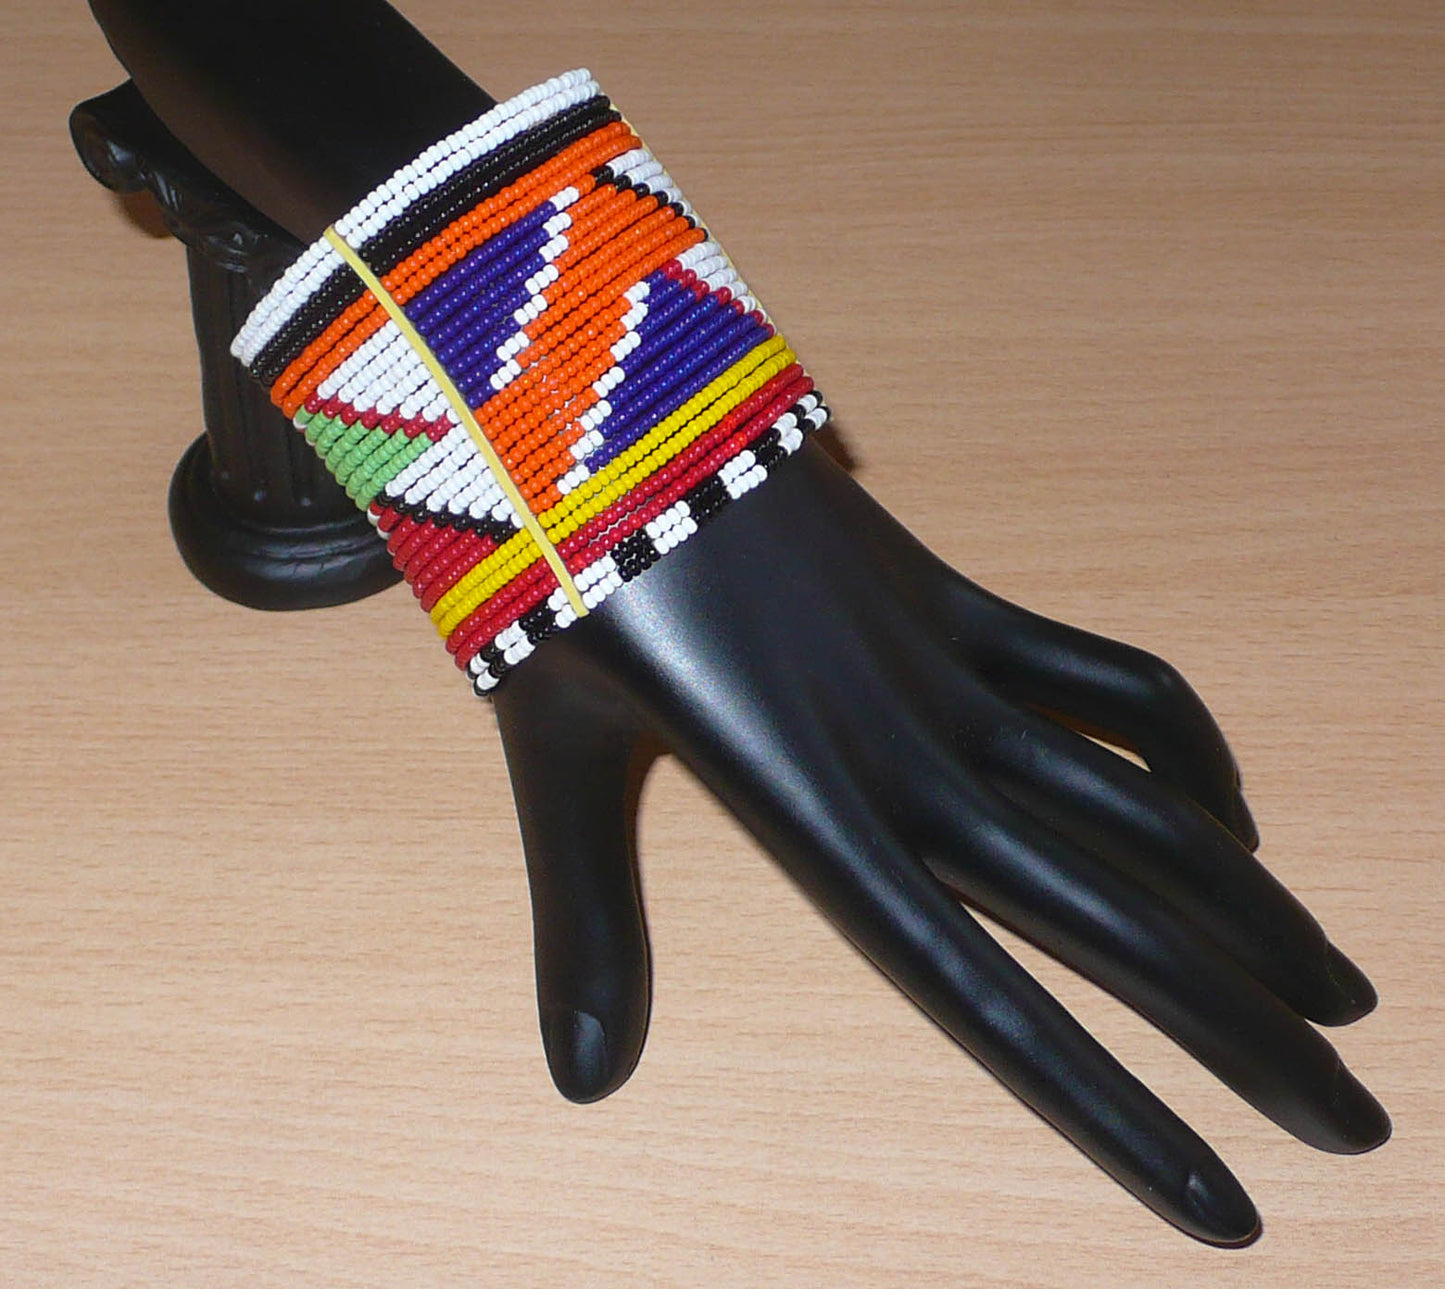 Bracelet africain traditionnel Massai